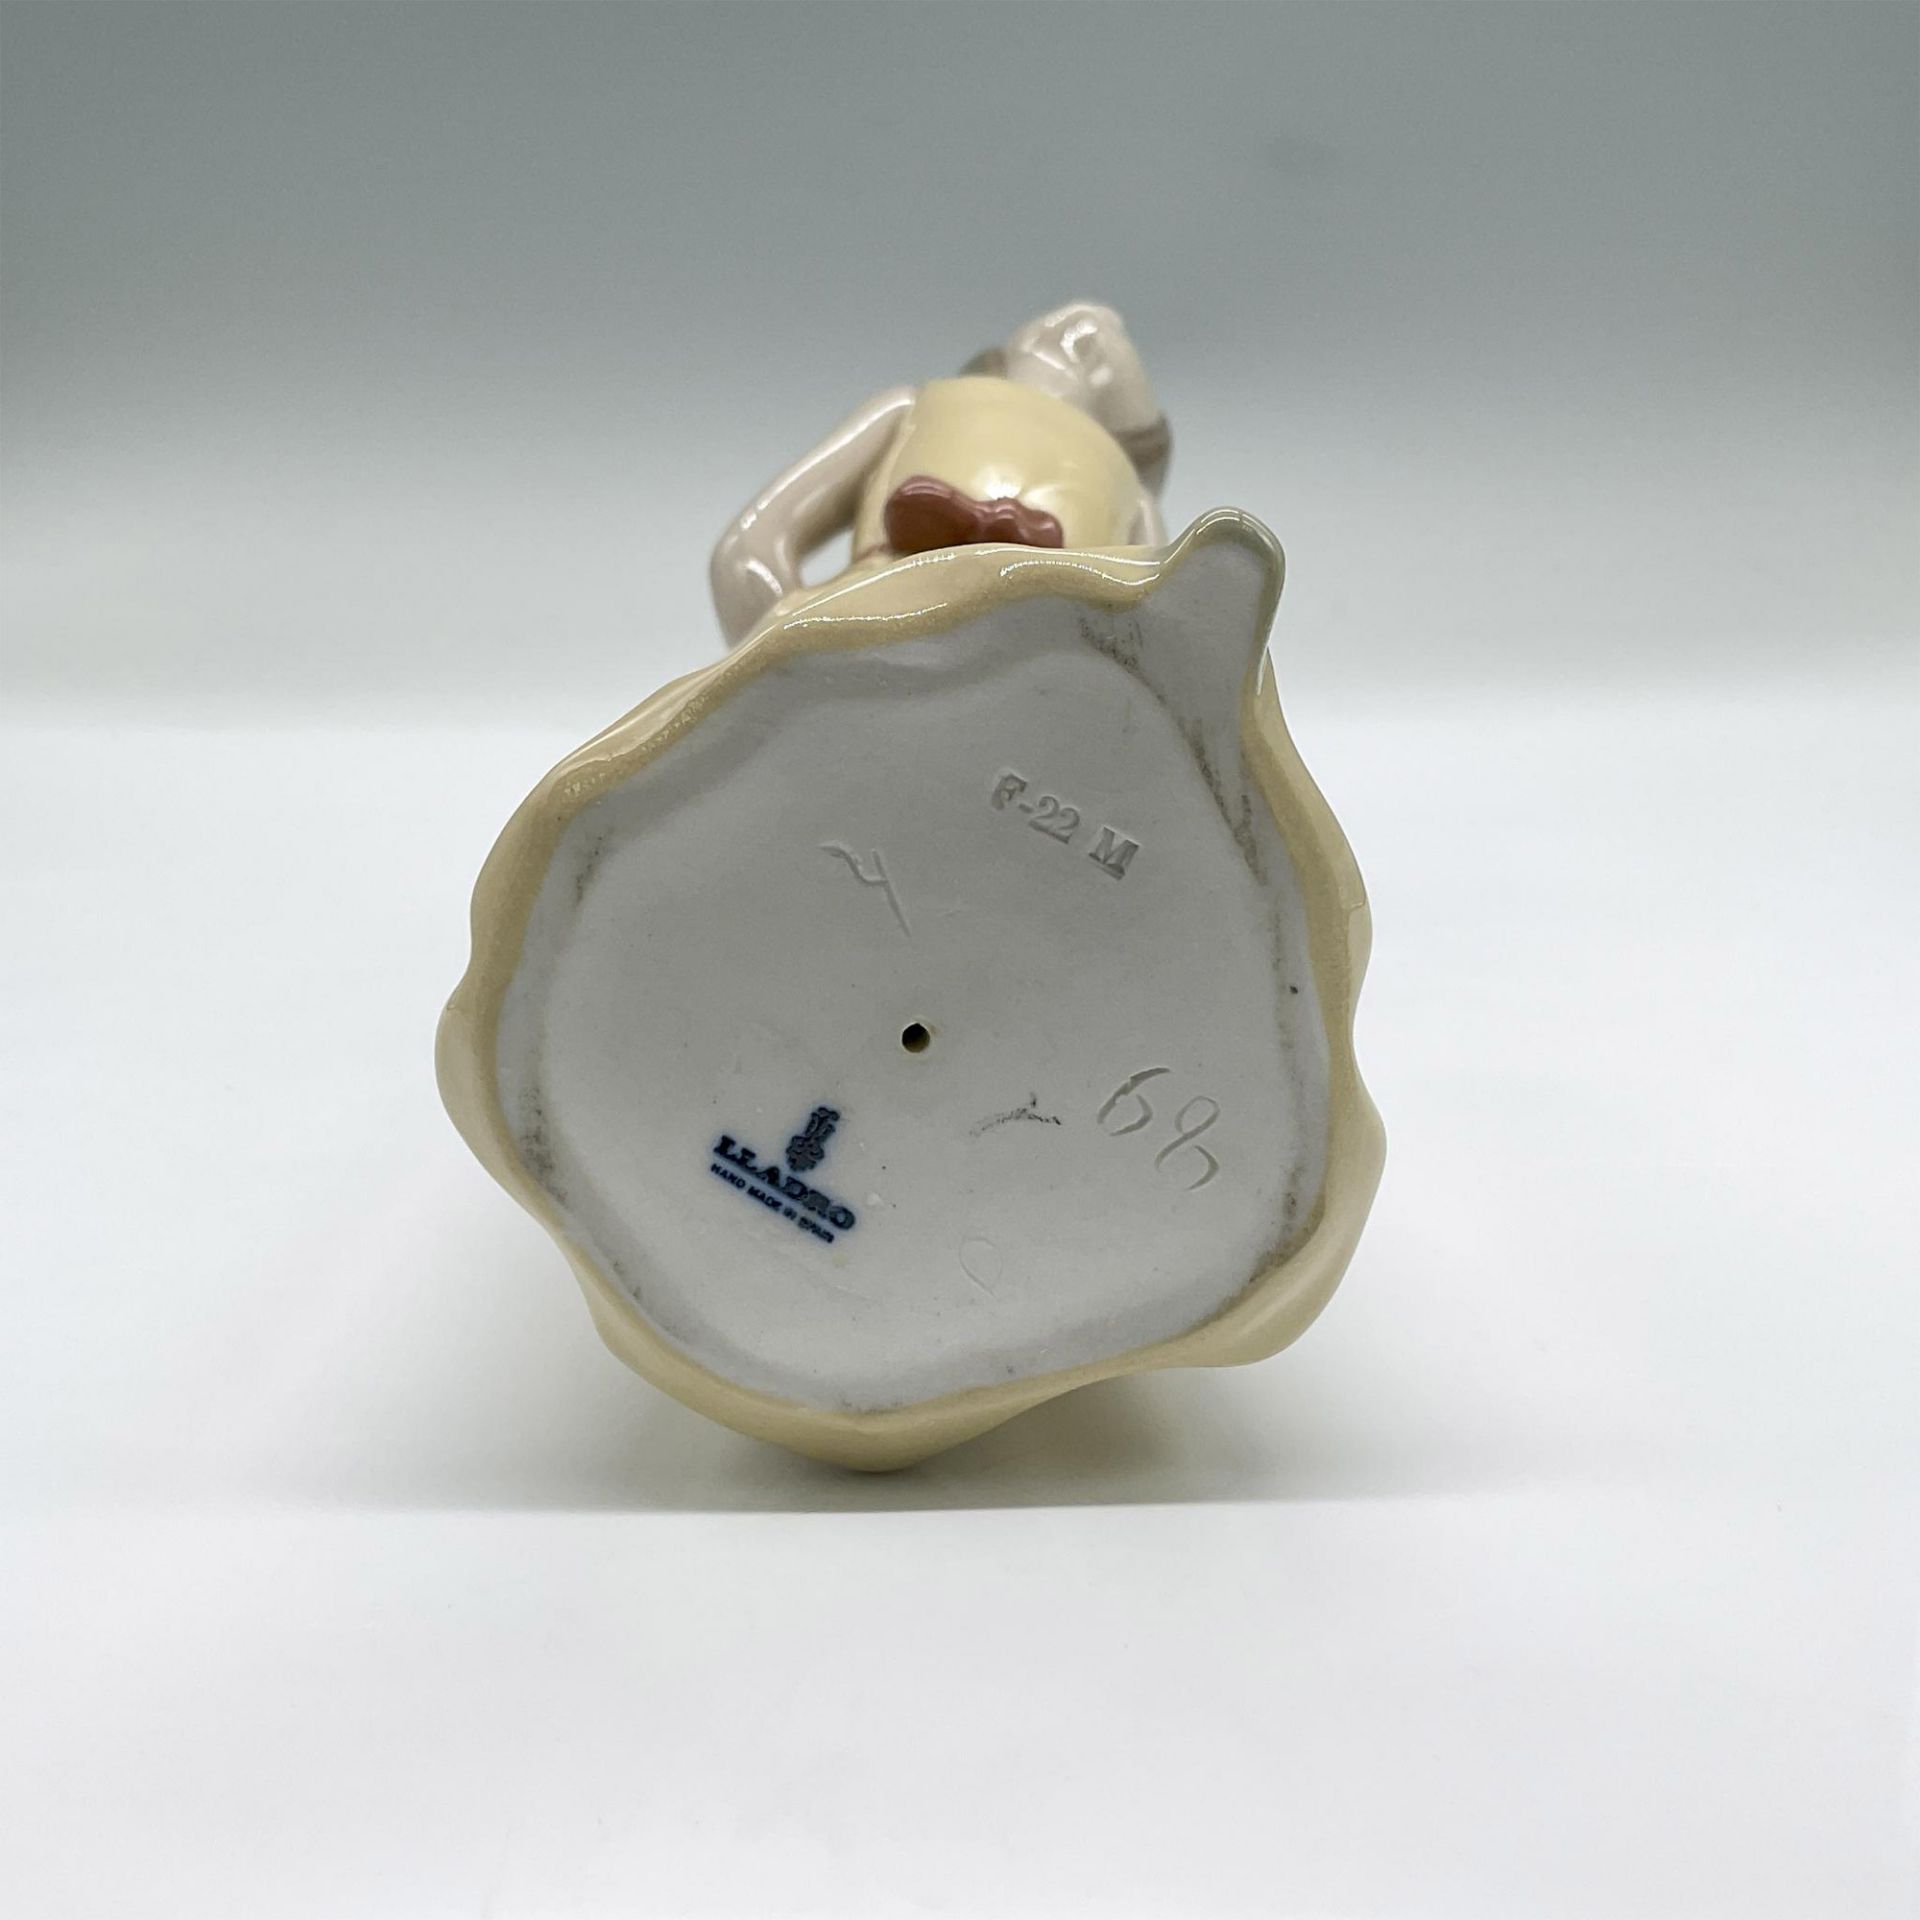 Lladro Porcelain Figurine, Naughty 1005006 - Image 3 of 3